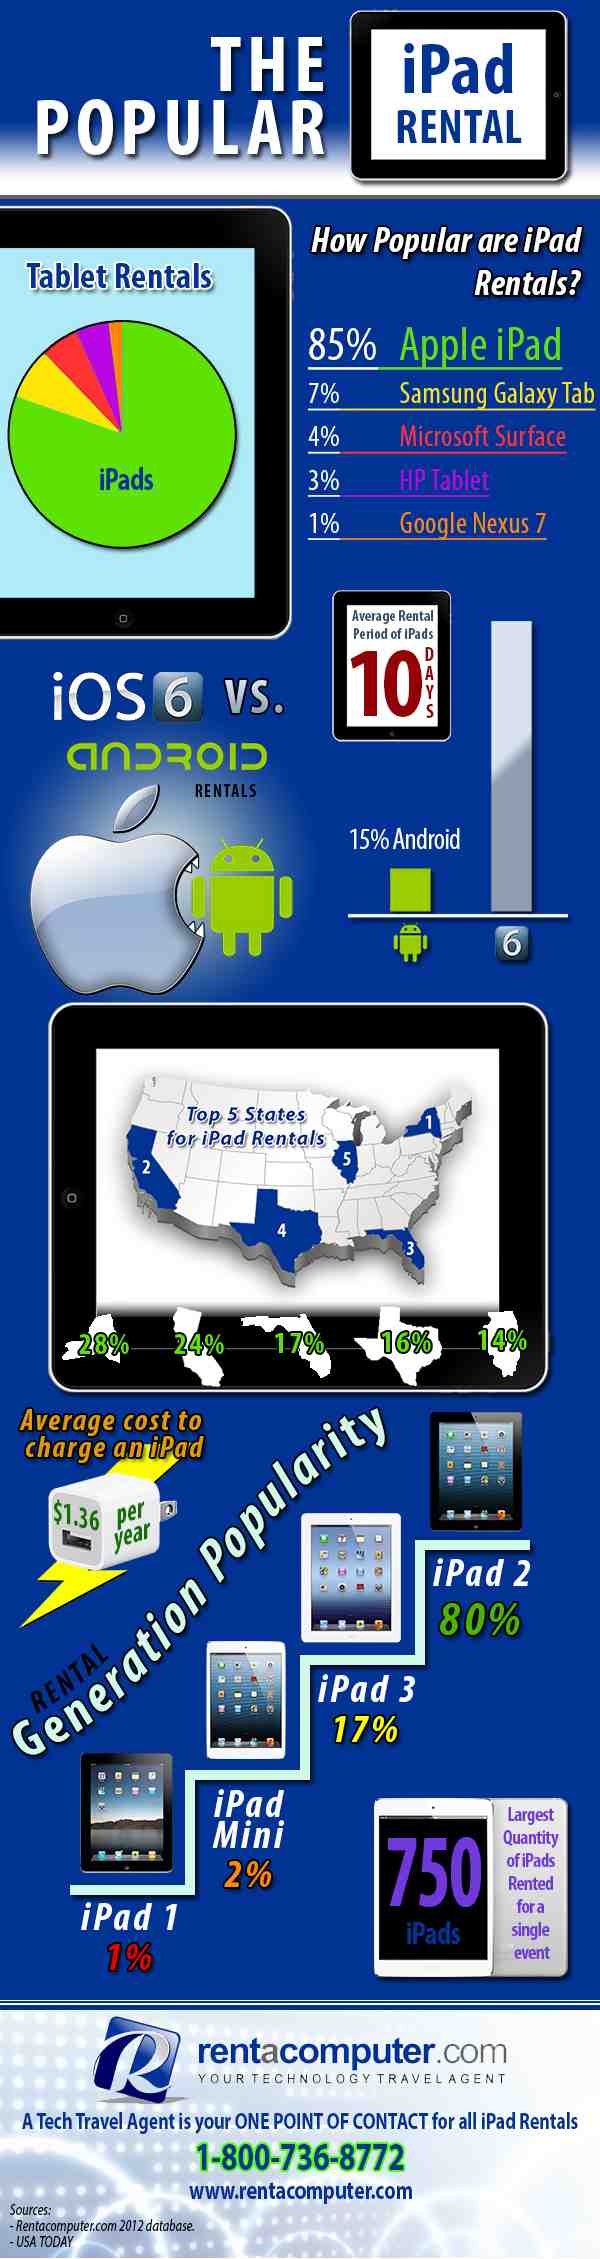 The Popular iPad Rental - Infographic